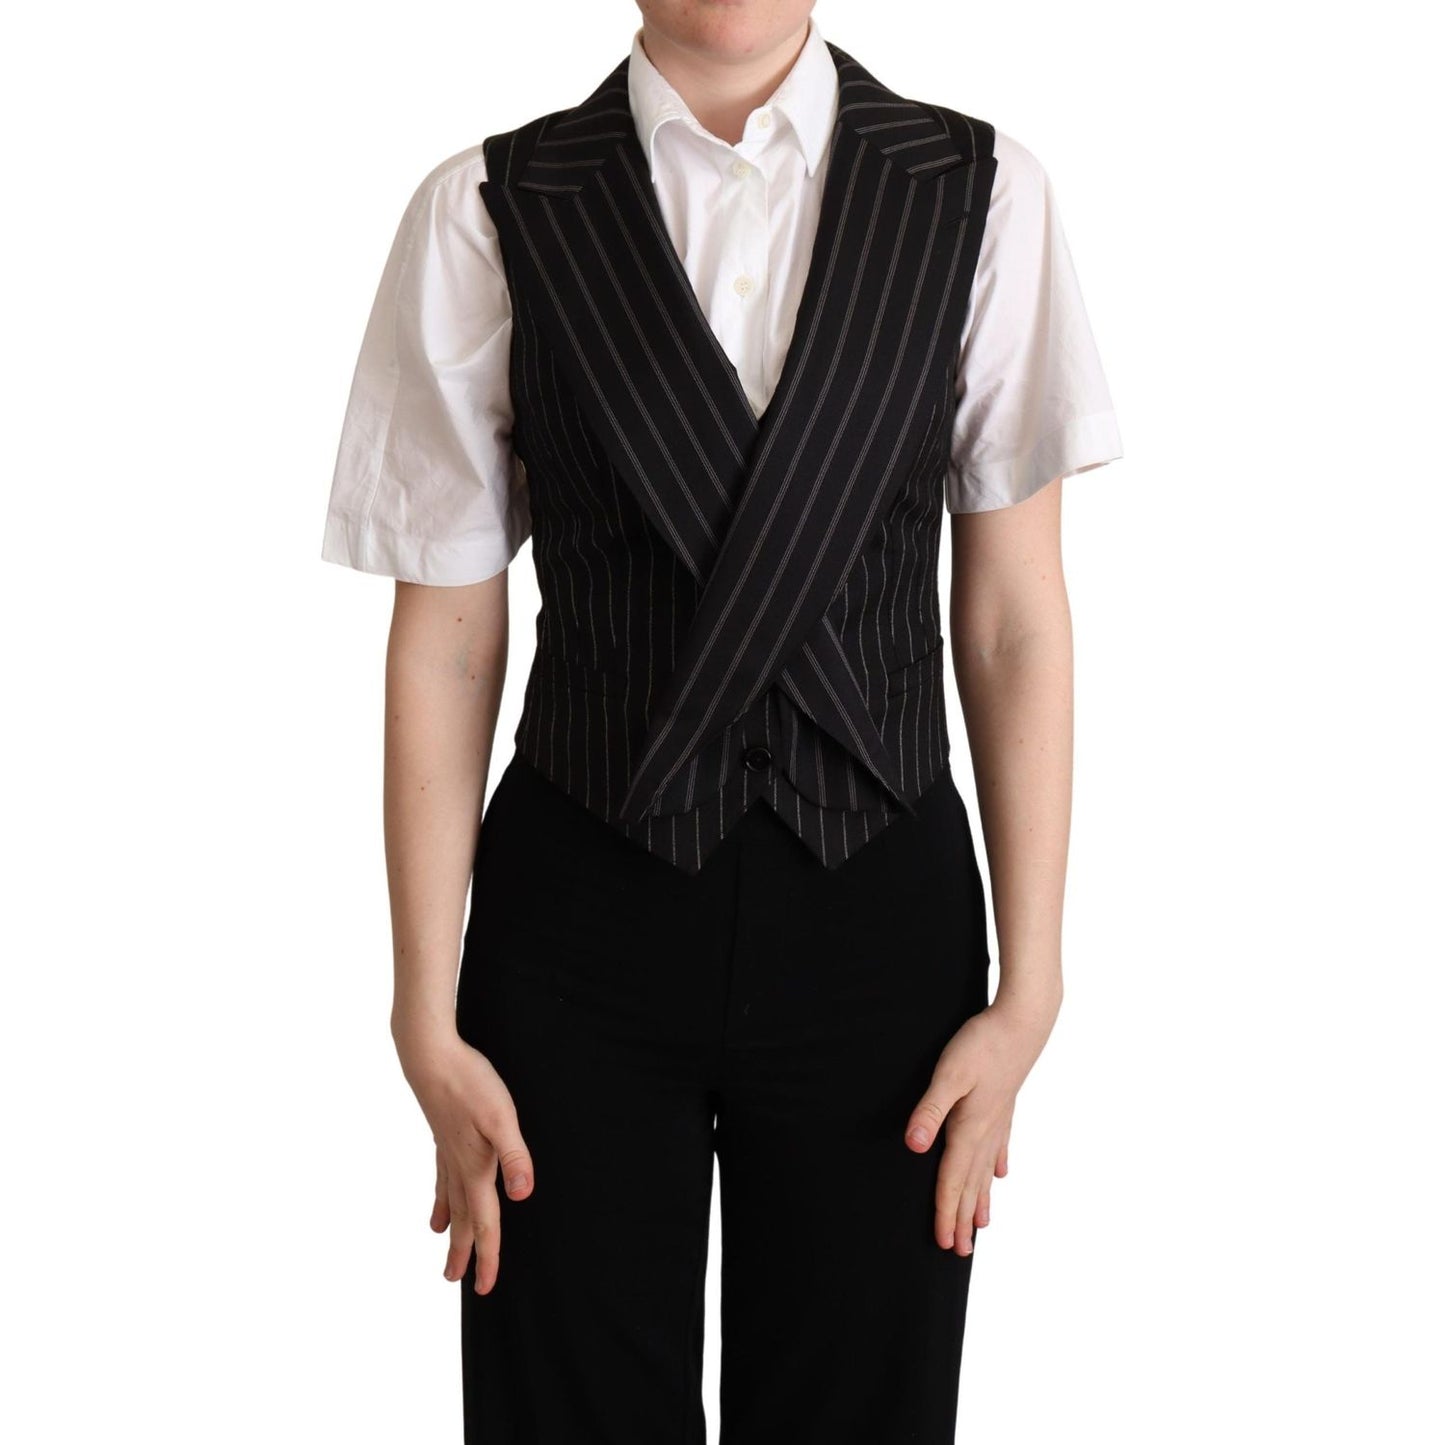 Dolce & Gabbana Elegant Leopard Print Waistcoat – Sleeveless Vest black-brown-leopard-print-waistcoat-vest